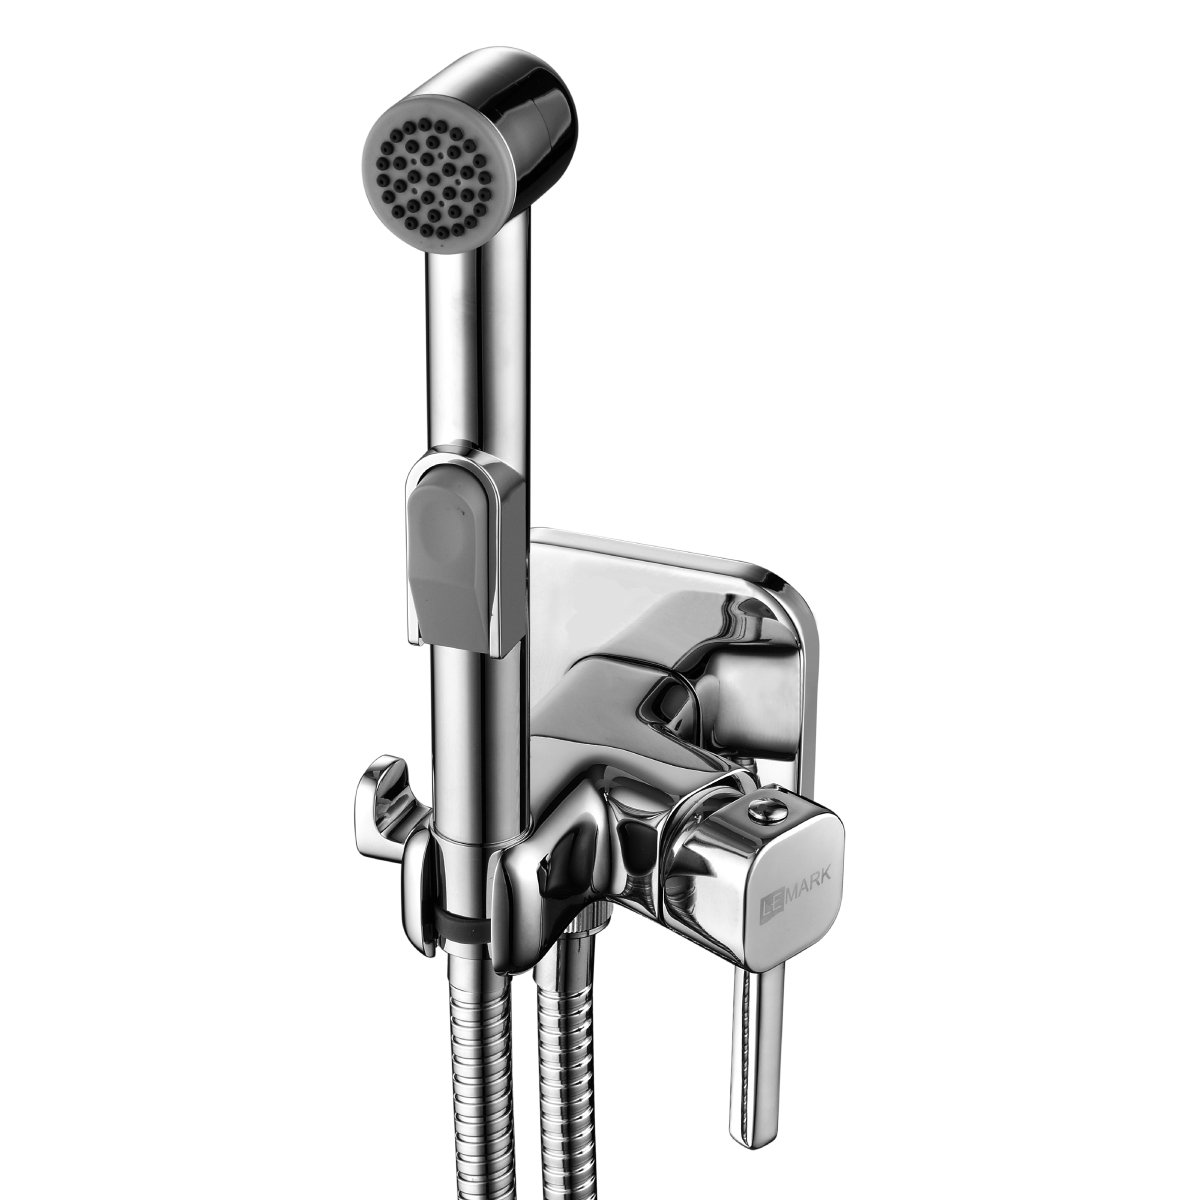 LM7165C Built-in bidet faucet